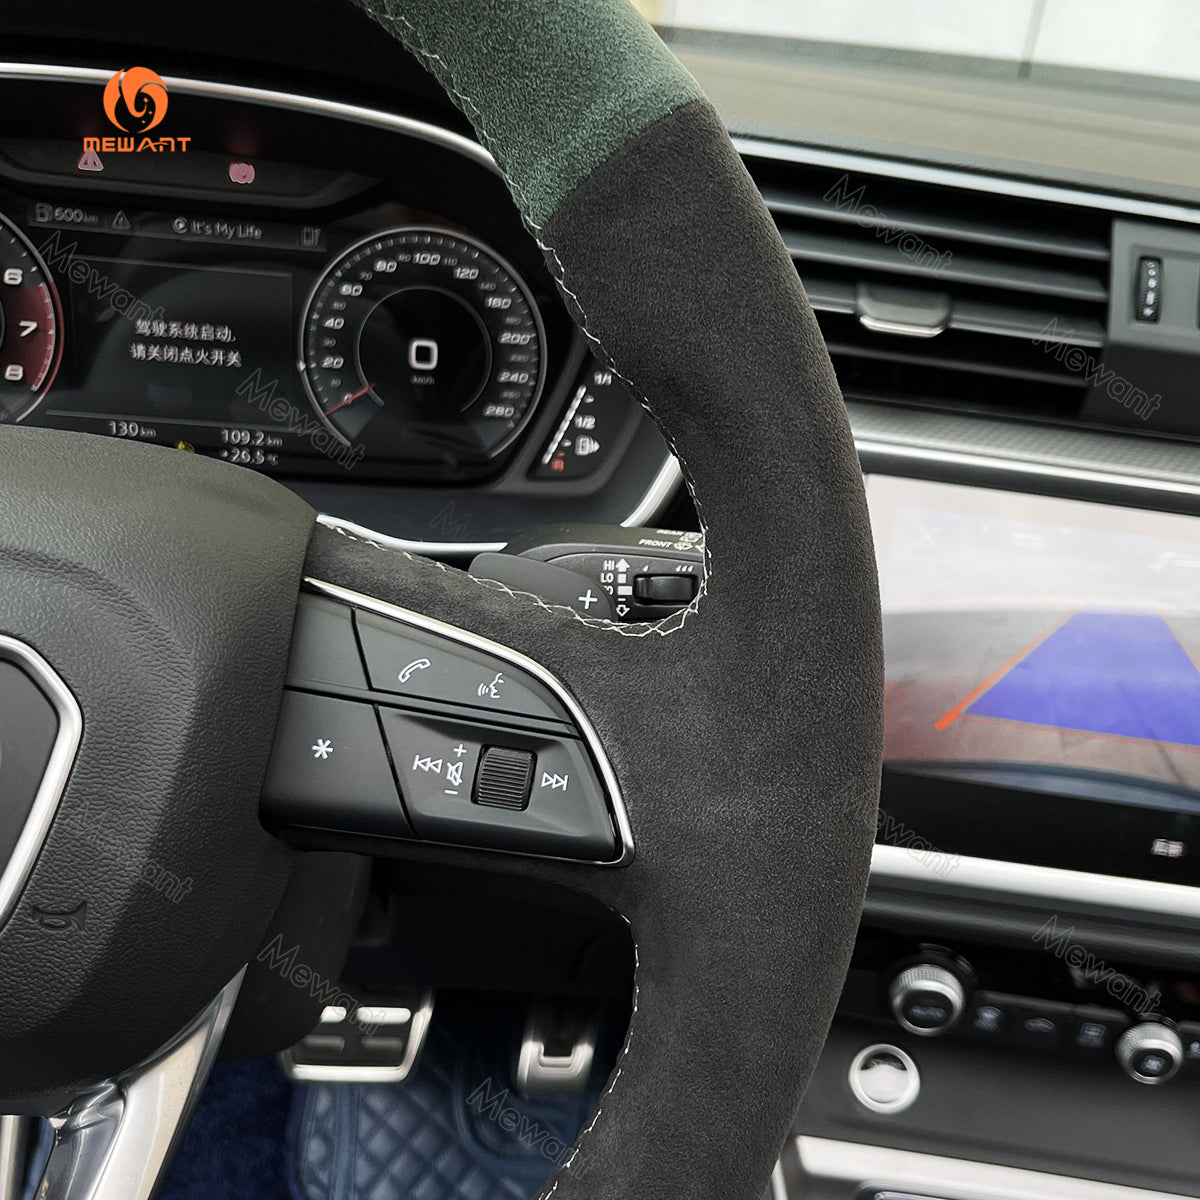 Car steering wheel cover for Audi Q3 2018-2019 / Q5 (FY) 2017-2019 / Q7 (4M) 2015-2019 / Q8 2018-2019 / SQ5 (FY) 2017-2019 / SQ7 (4M) 2016-2019 / SQ8 2019